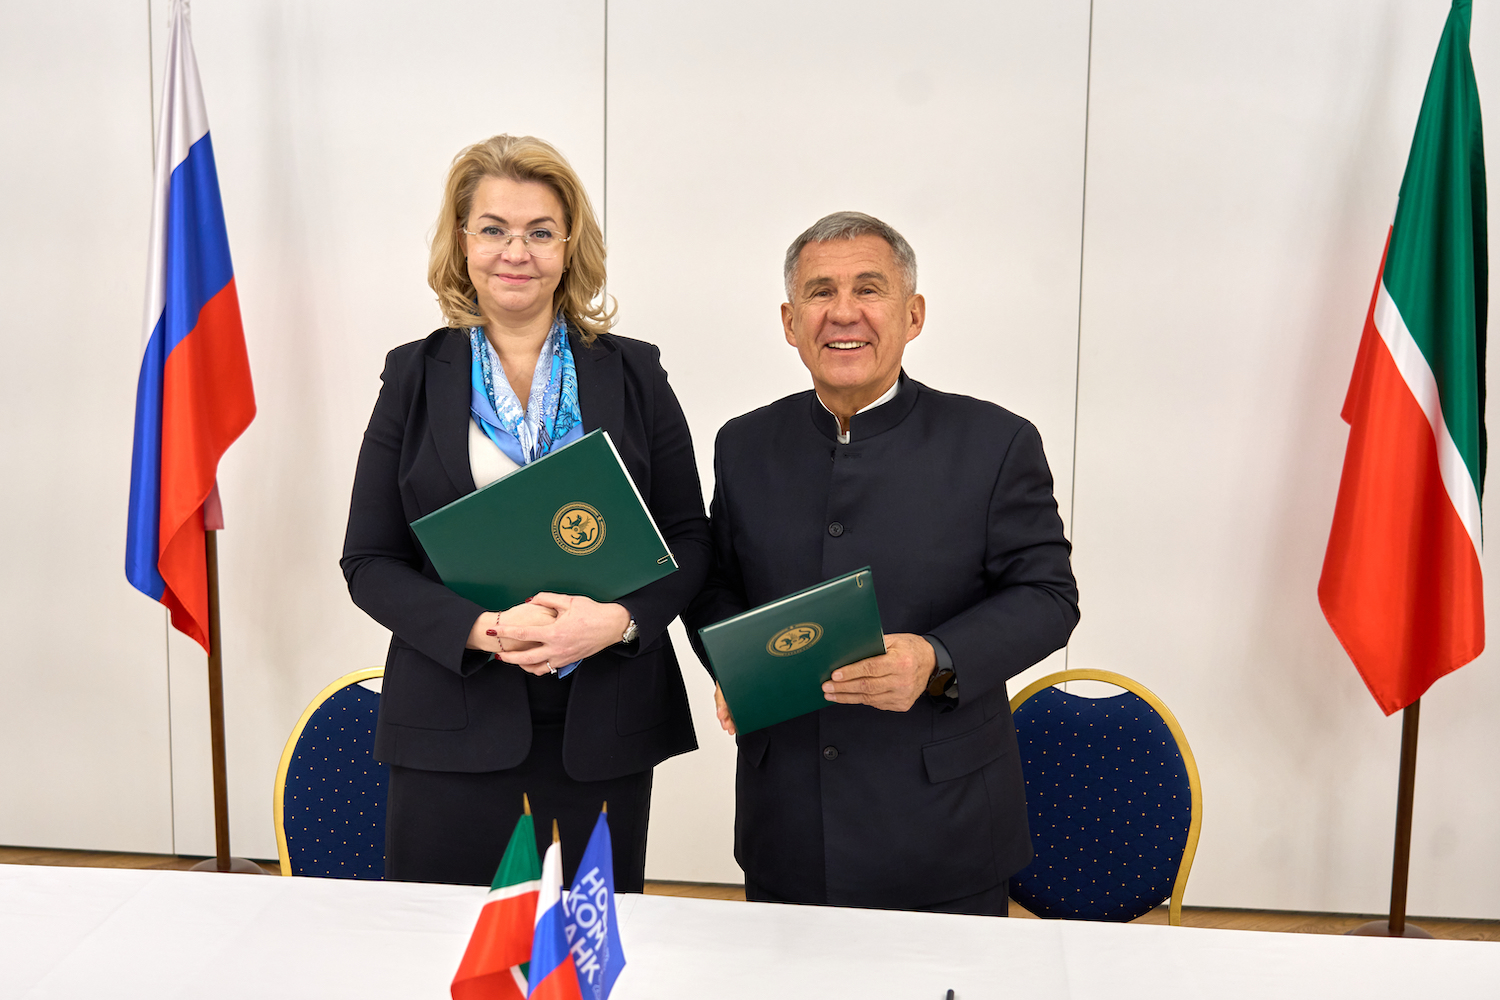 Новикомбанк и Республика Татарстан договорились о сотрудничестве